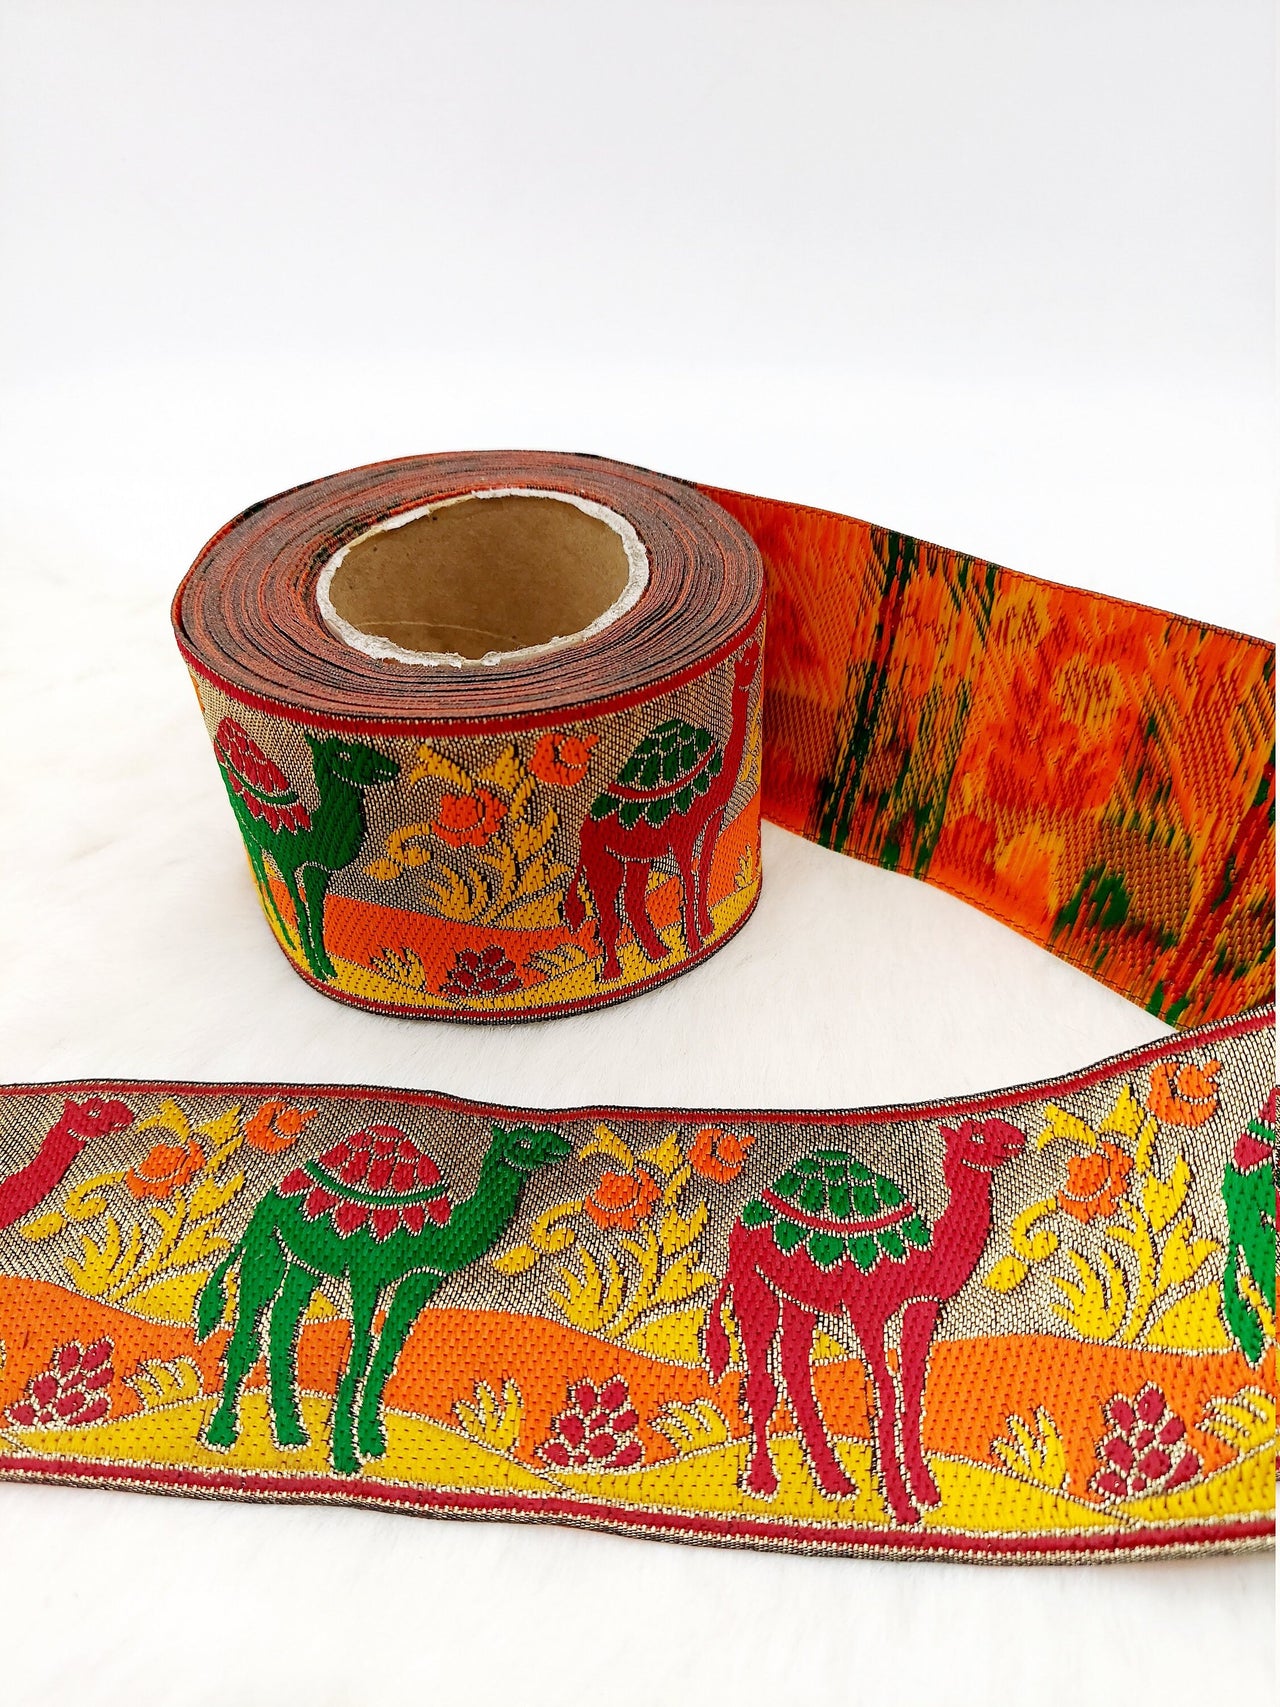 9 Yards Antique Gold Jacquard Brocade Sari Border Trim, Indian Woven Ribbon, Camel Trim